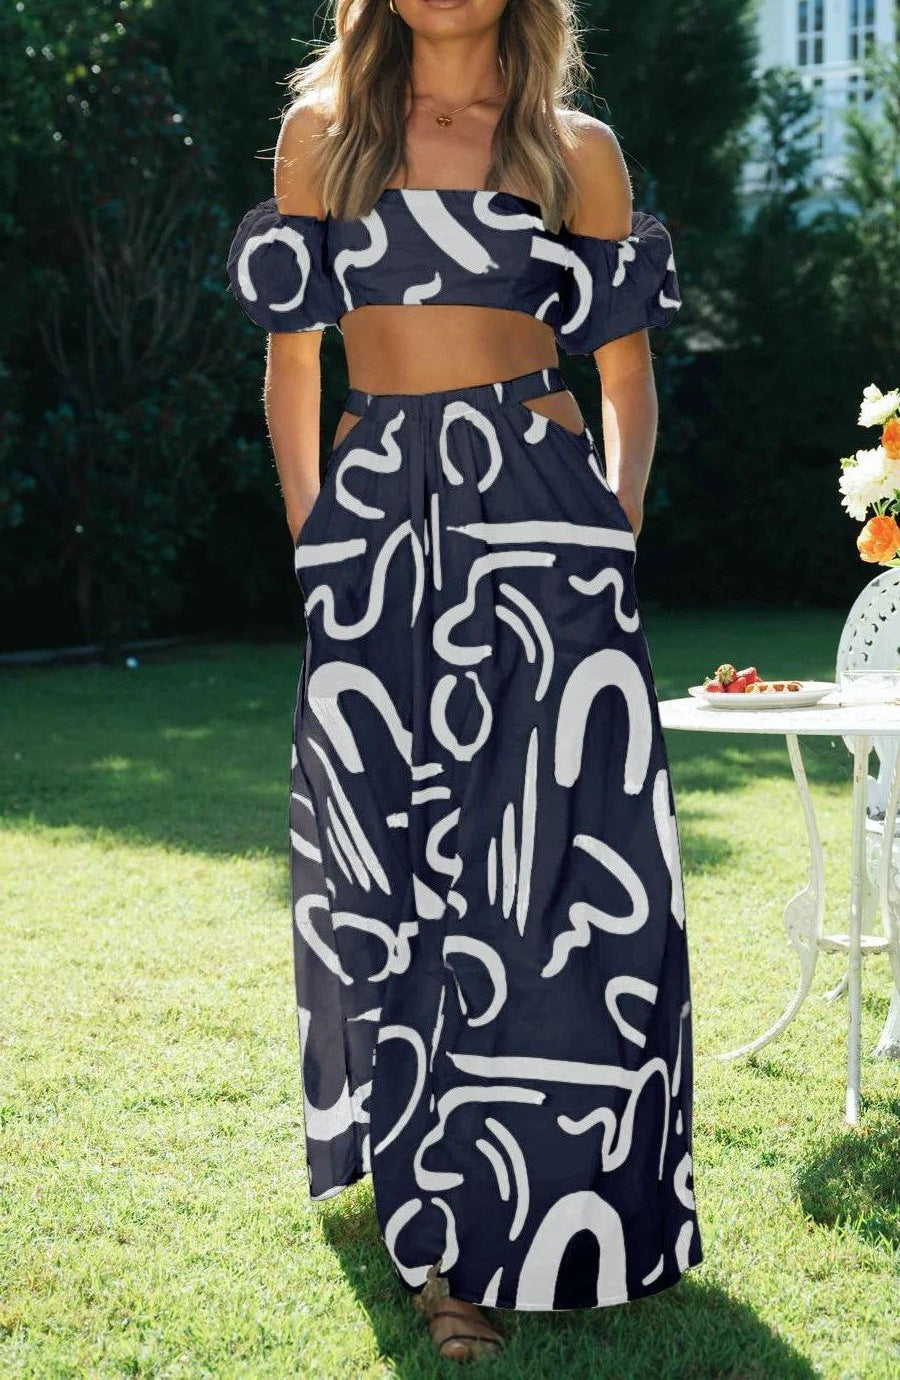 Women Clothing Summer Puff Sleeve Top Hollow Out Cutout Large Swing Dress Split Skirt Set